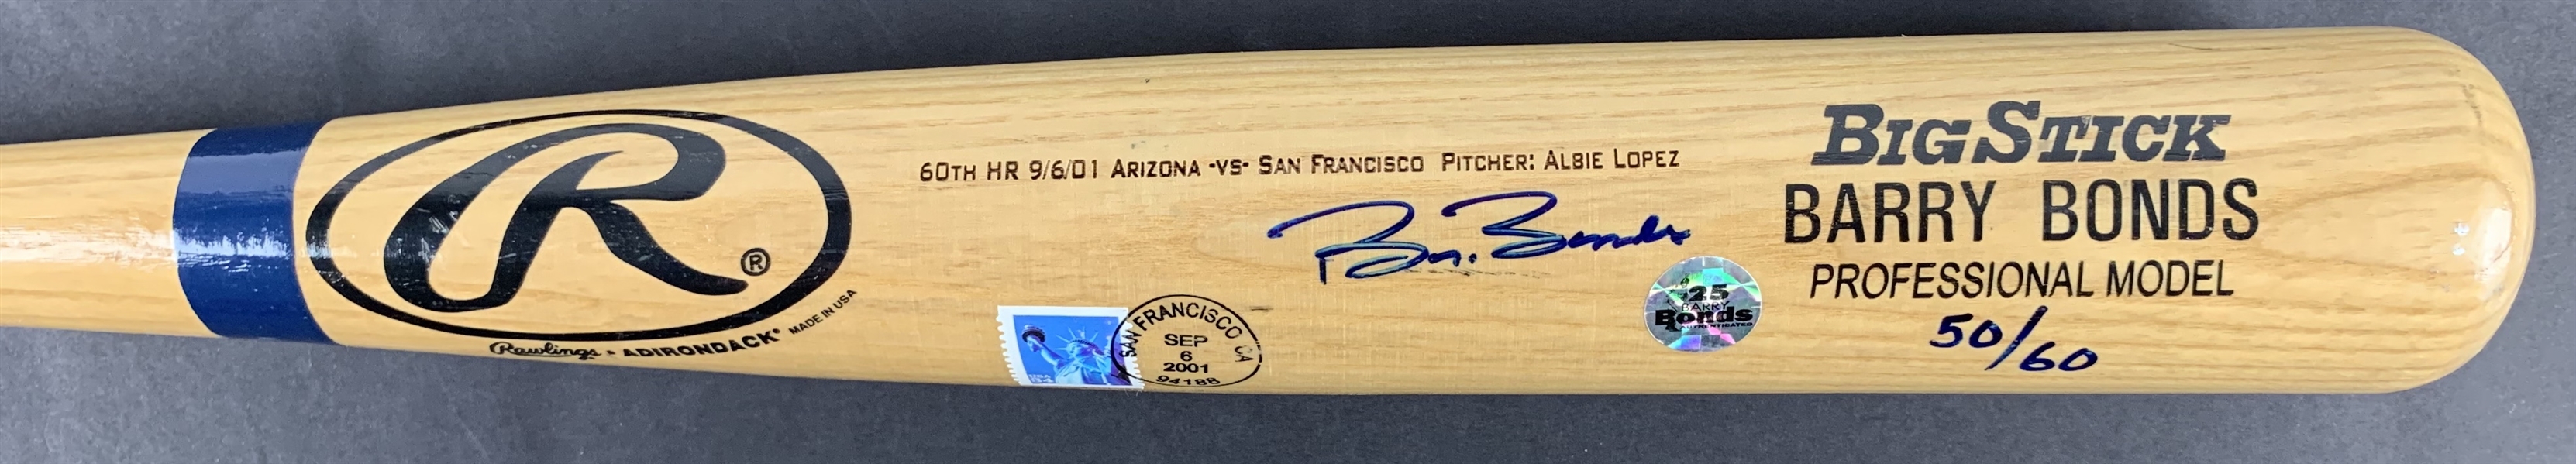 Barry Bonds Signed Ltd. Ed. 60th Home Run Commemorative Big Stick Baseball Bat (Player Holo & Goldin Sports Holo)